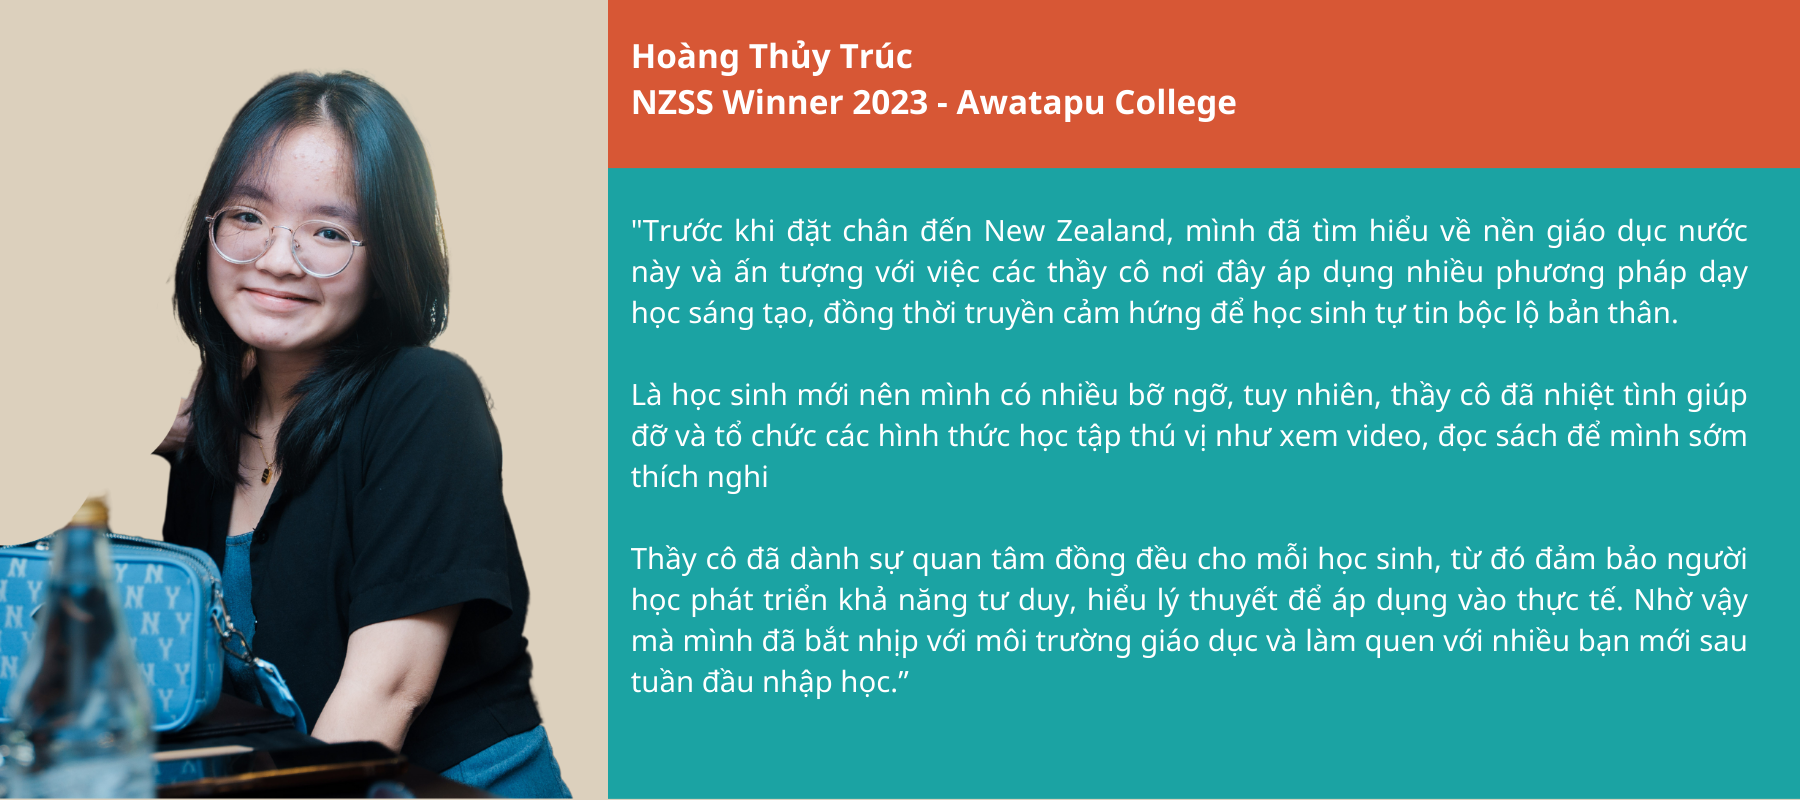 Hoang Thuy Truc 